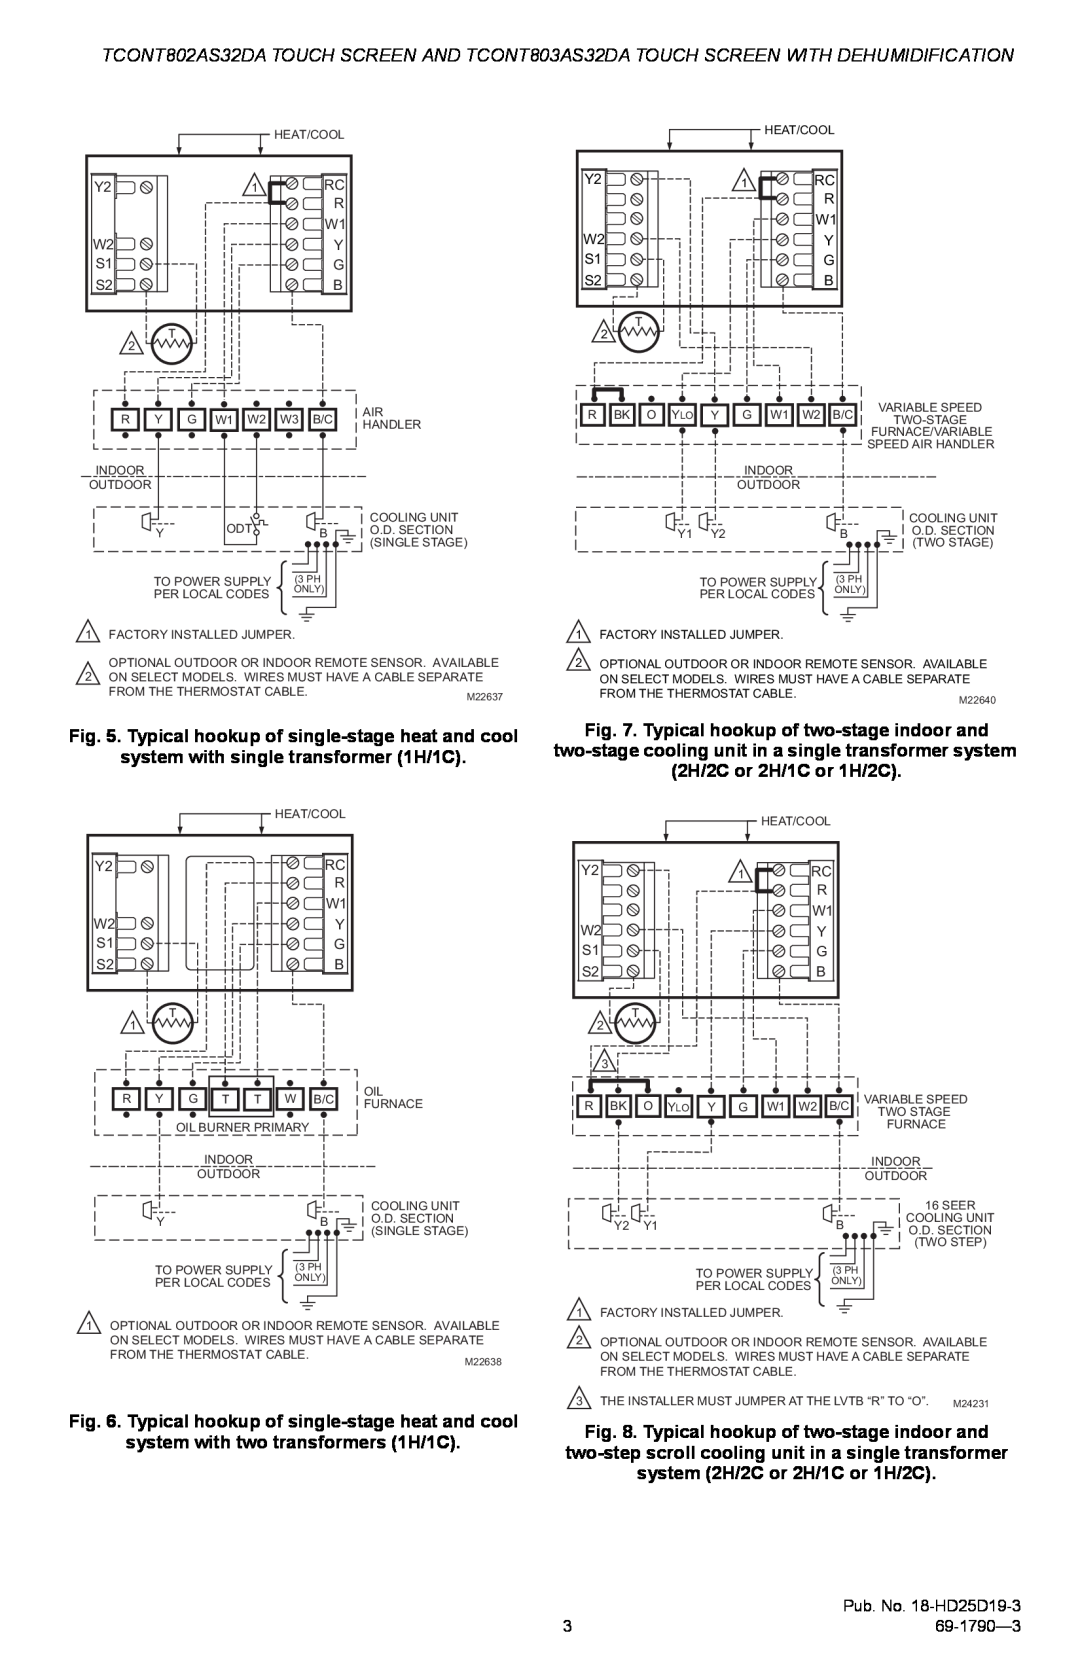 Trane TCONT802AS32DA, TCONT803AS32DA installation instructions system with single transformer 1H/1C 